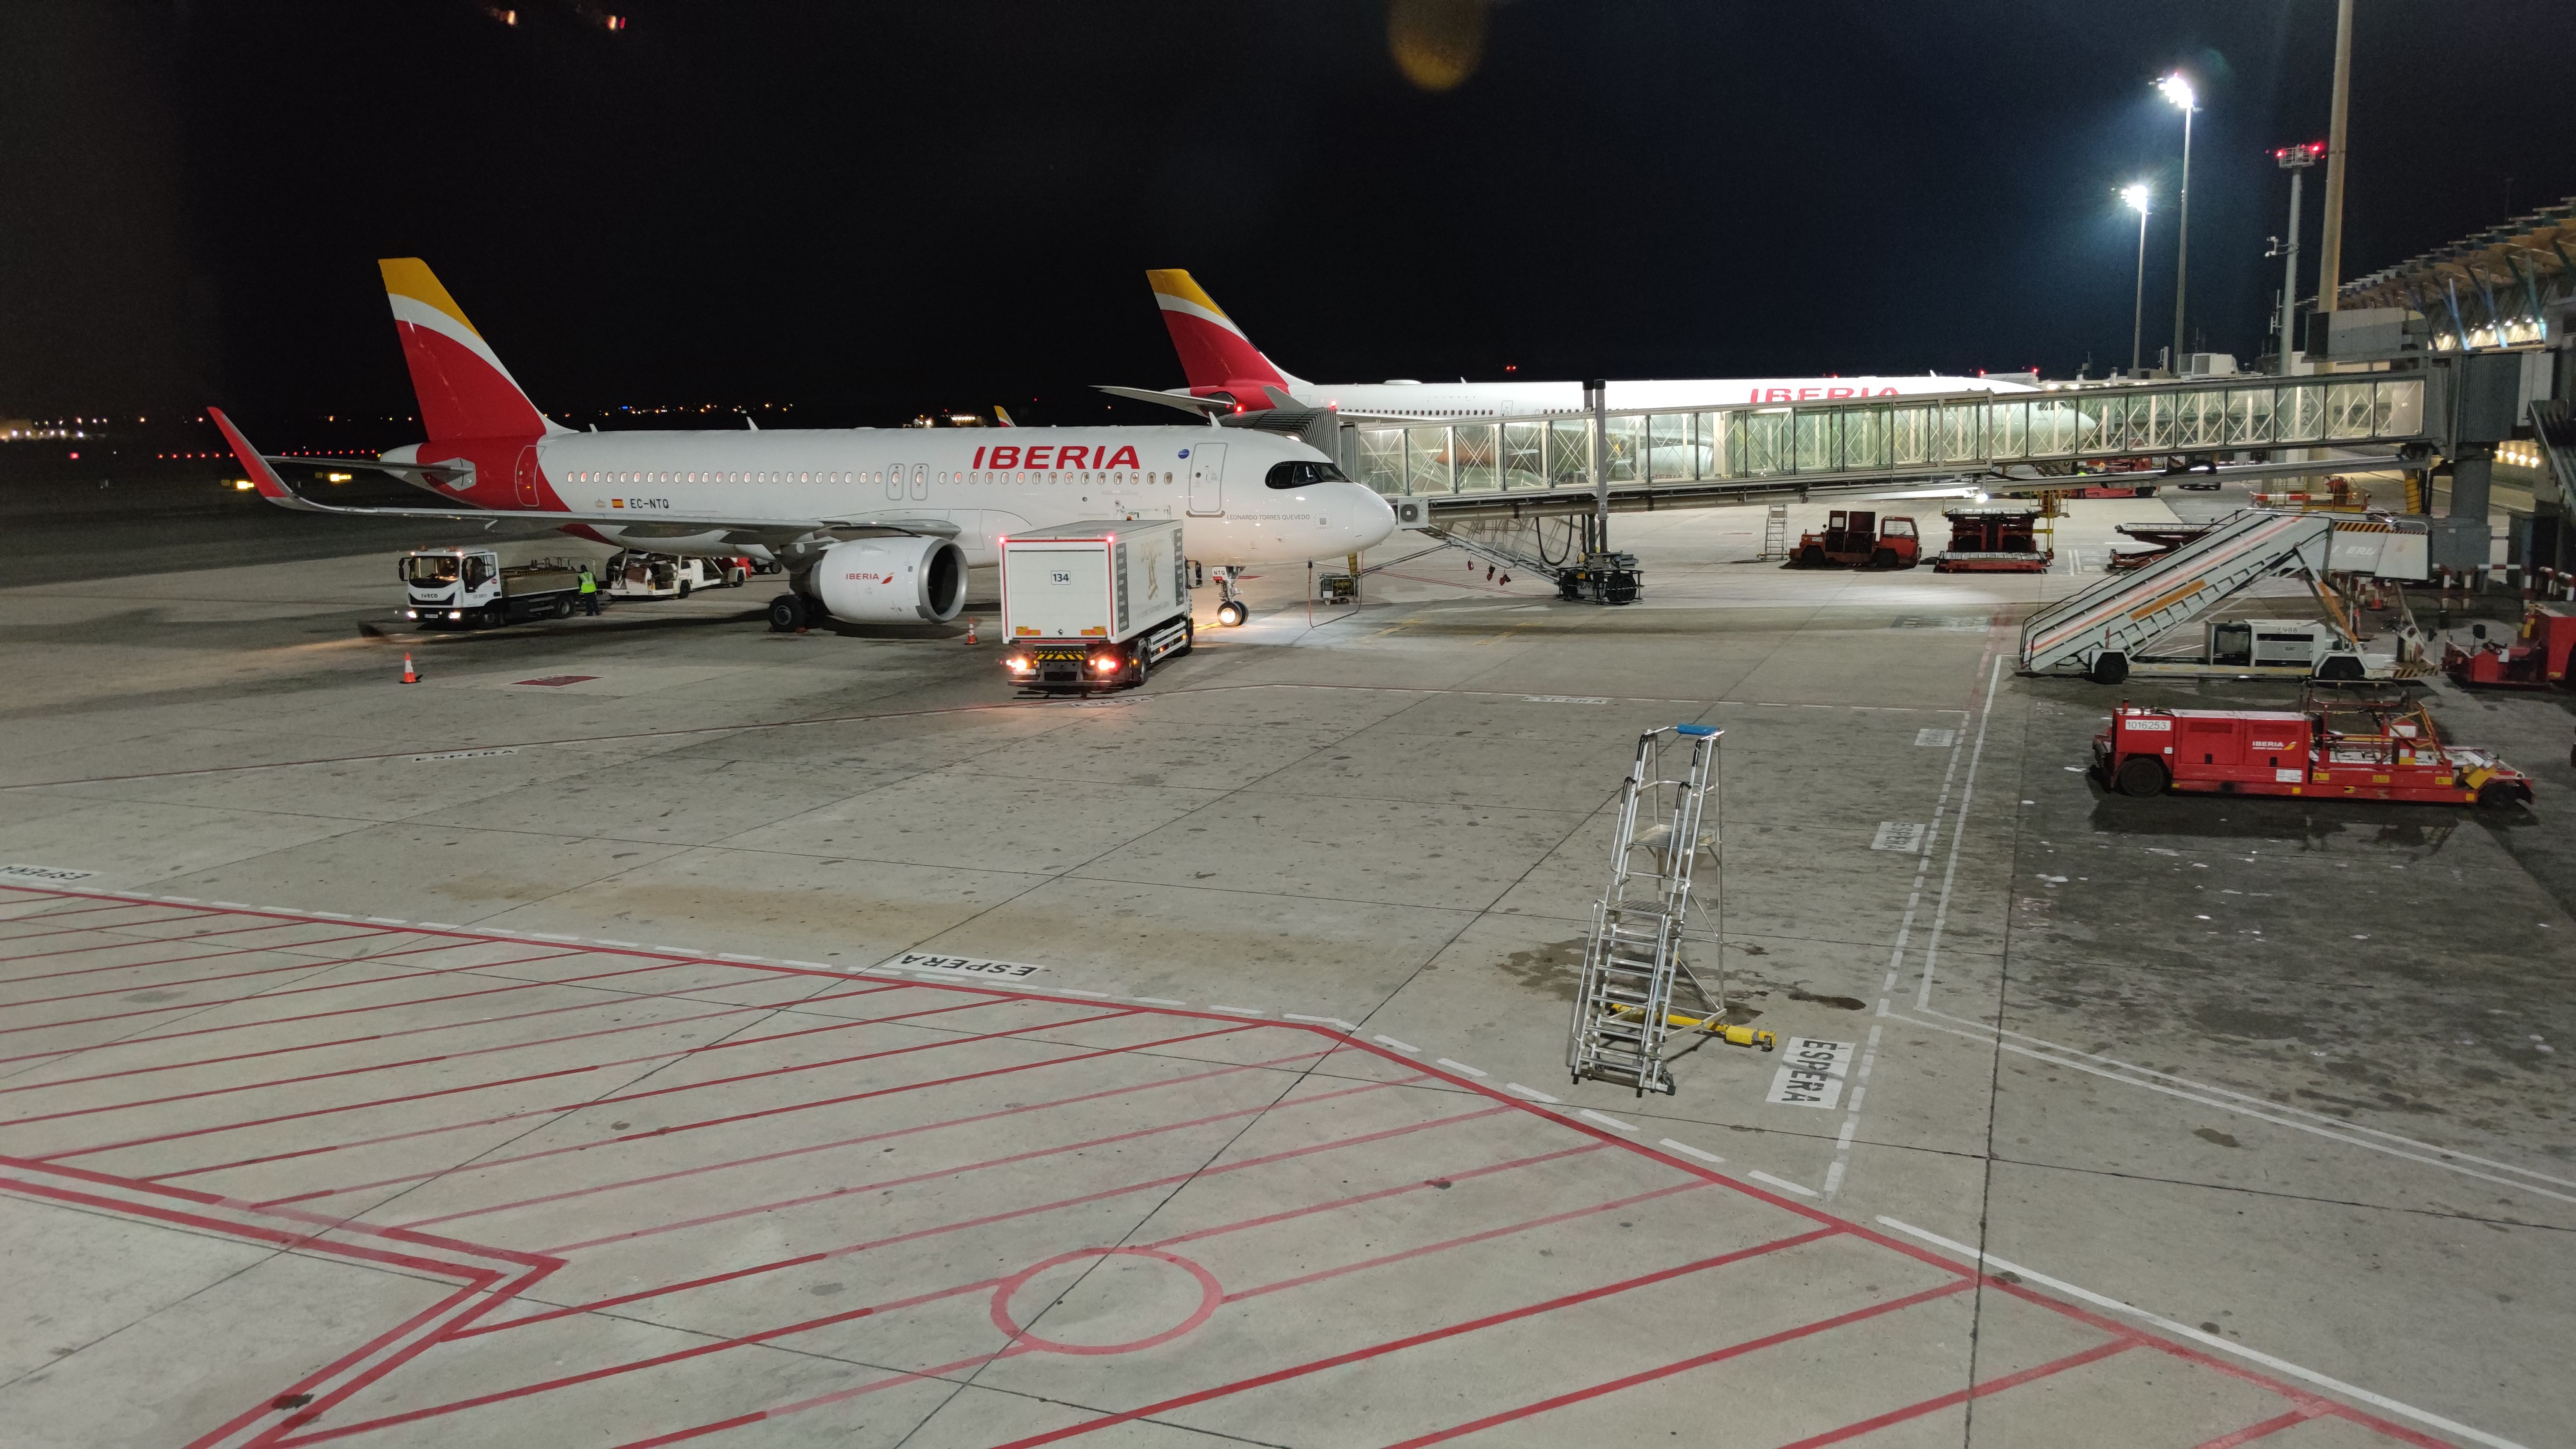 An Iberia aircraft parked at Madrid Barajas Airport at night.